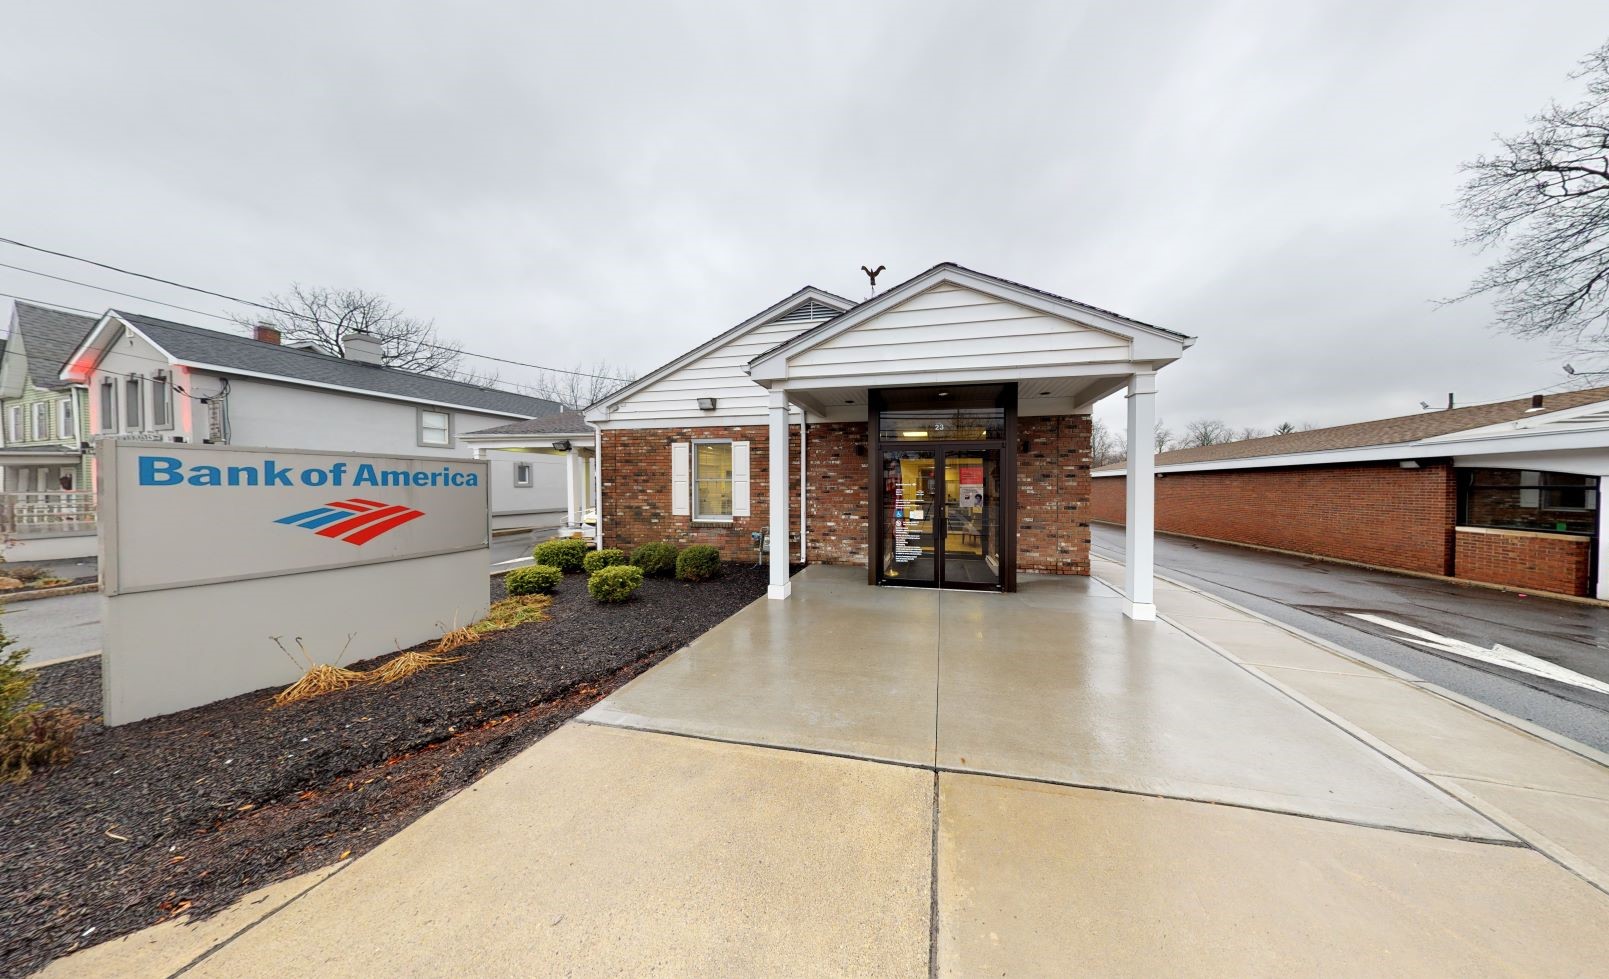 Bank of America financial center with drive-thru ATM | 23 E Main St, Washingtonville, NY 10992